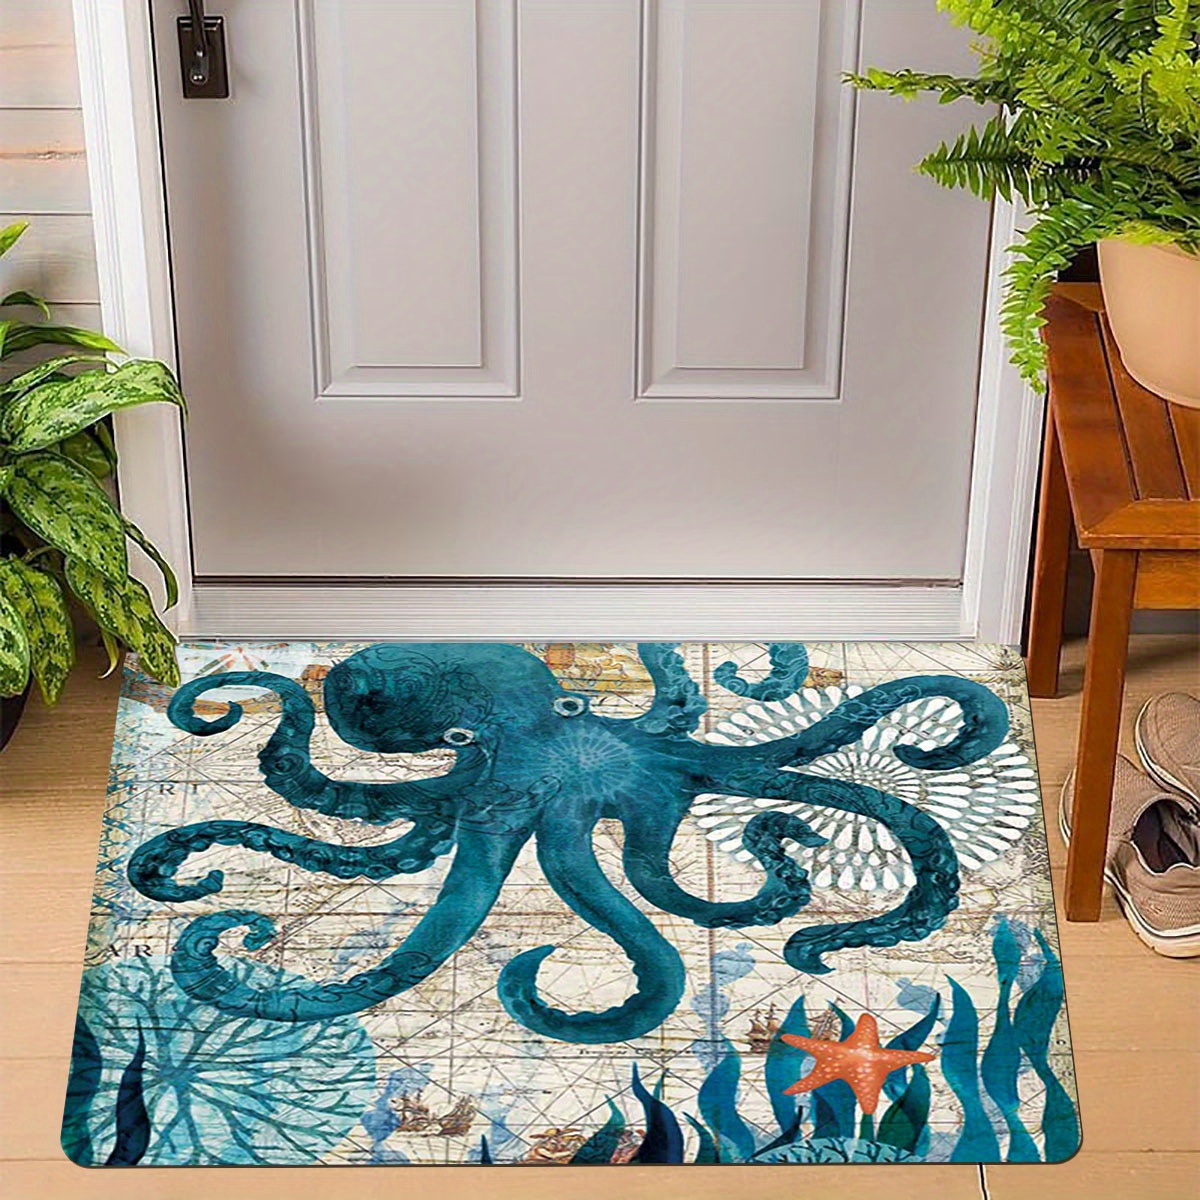 

1pc Door Mat, Blue Octopus Animal Elements Printed Pattern Rug, Non-slip Stain Resistant Floor Mat For Indoor Outdoor Decor, Spring Summer Decor